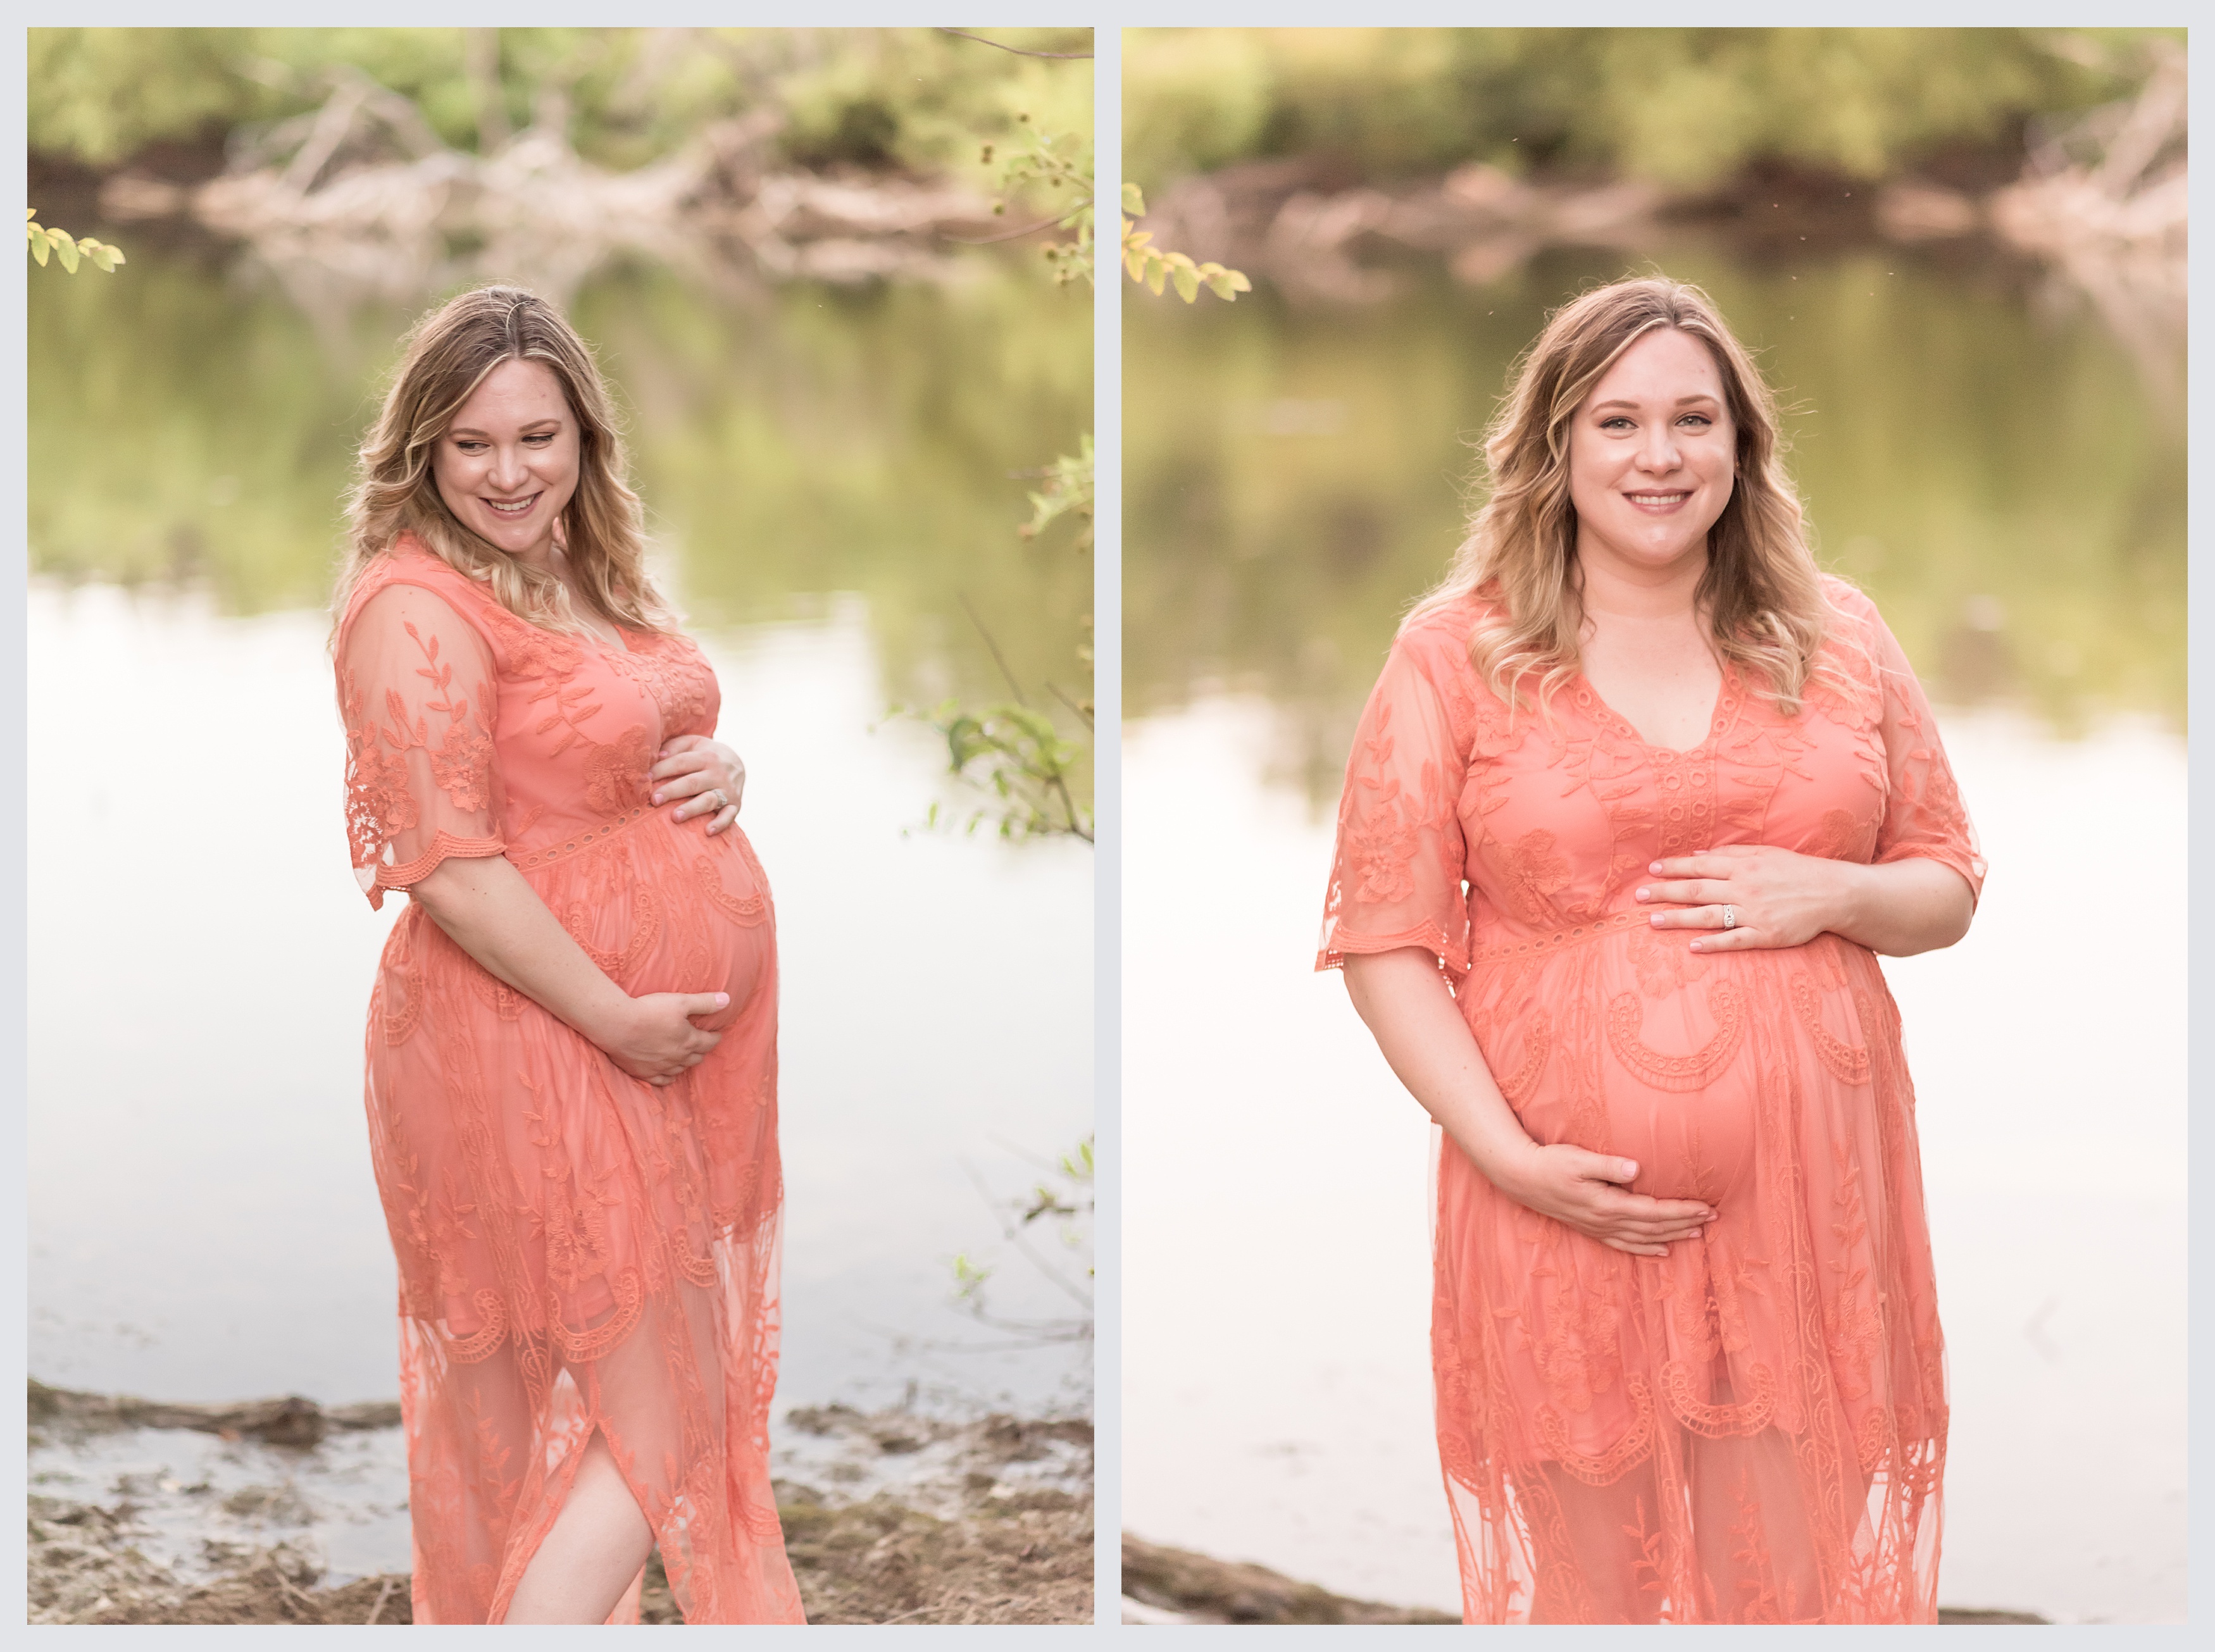 Plano, Texas Maternity Portraits